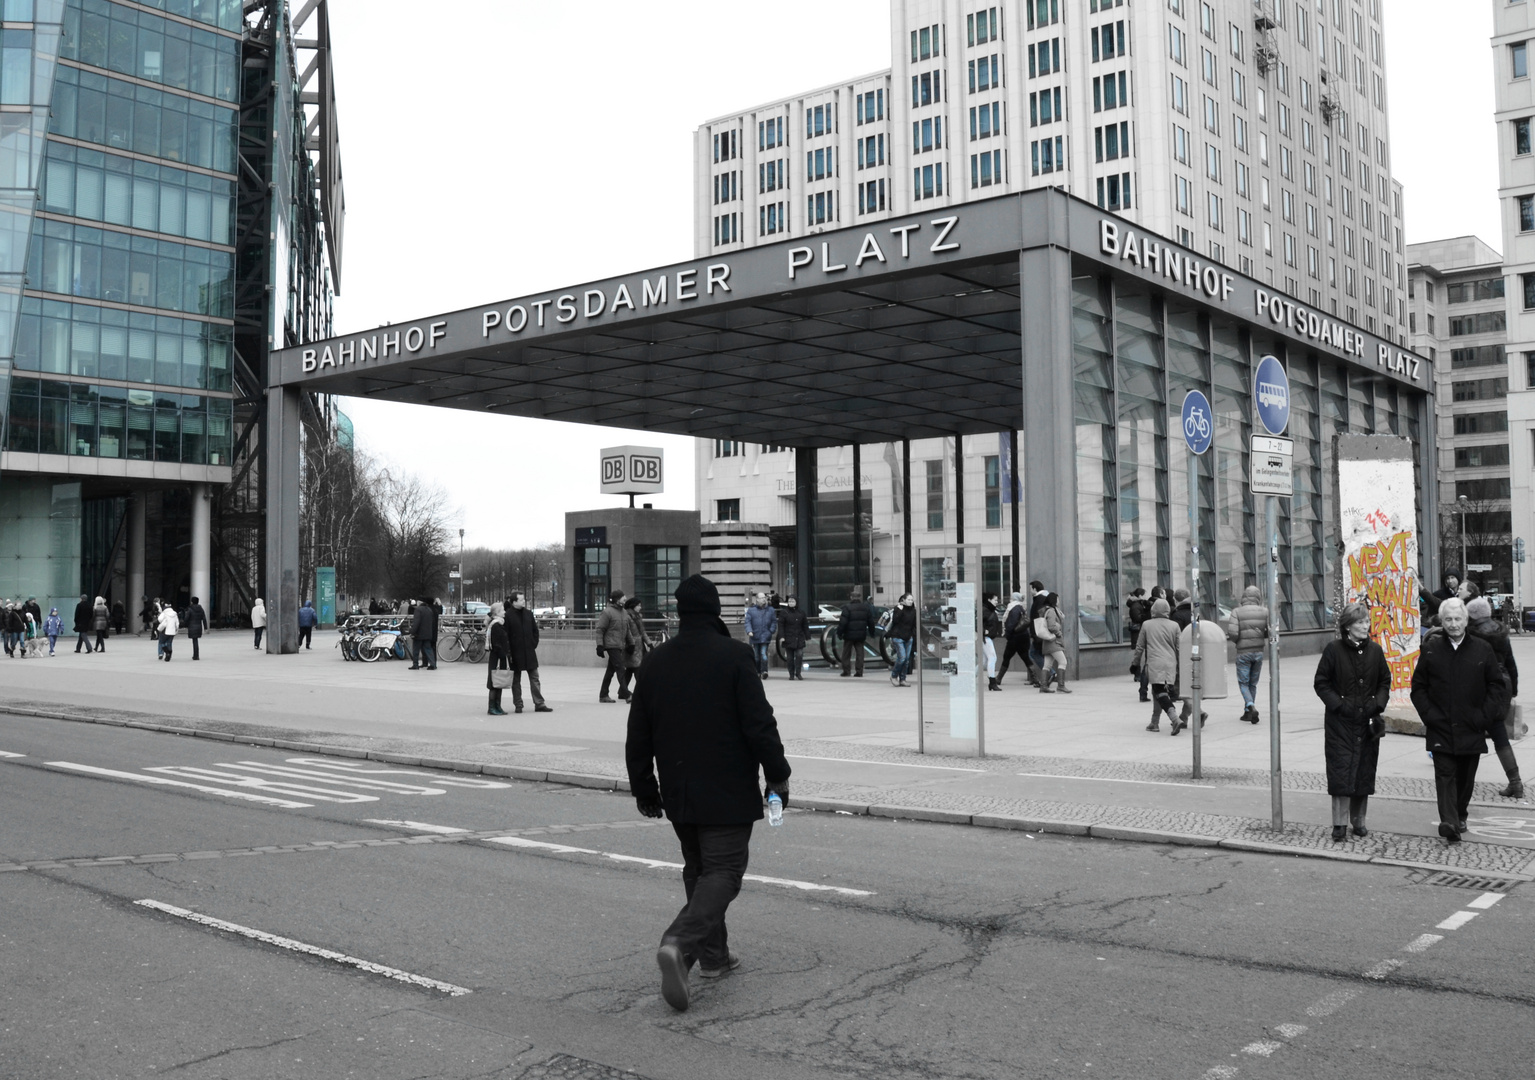 Berlin Potsdamer Platz II